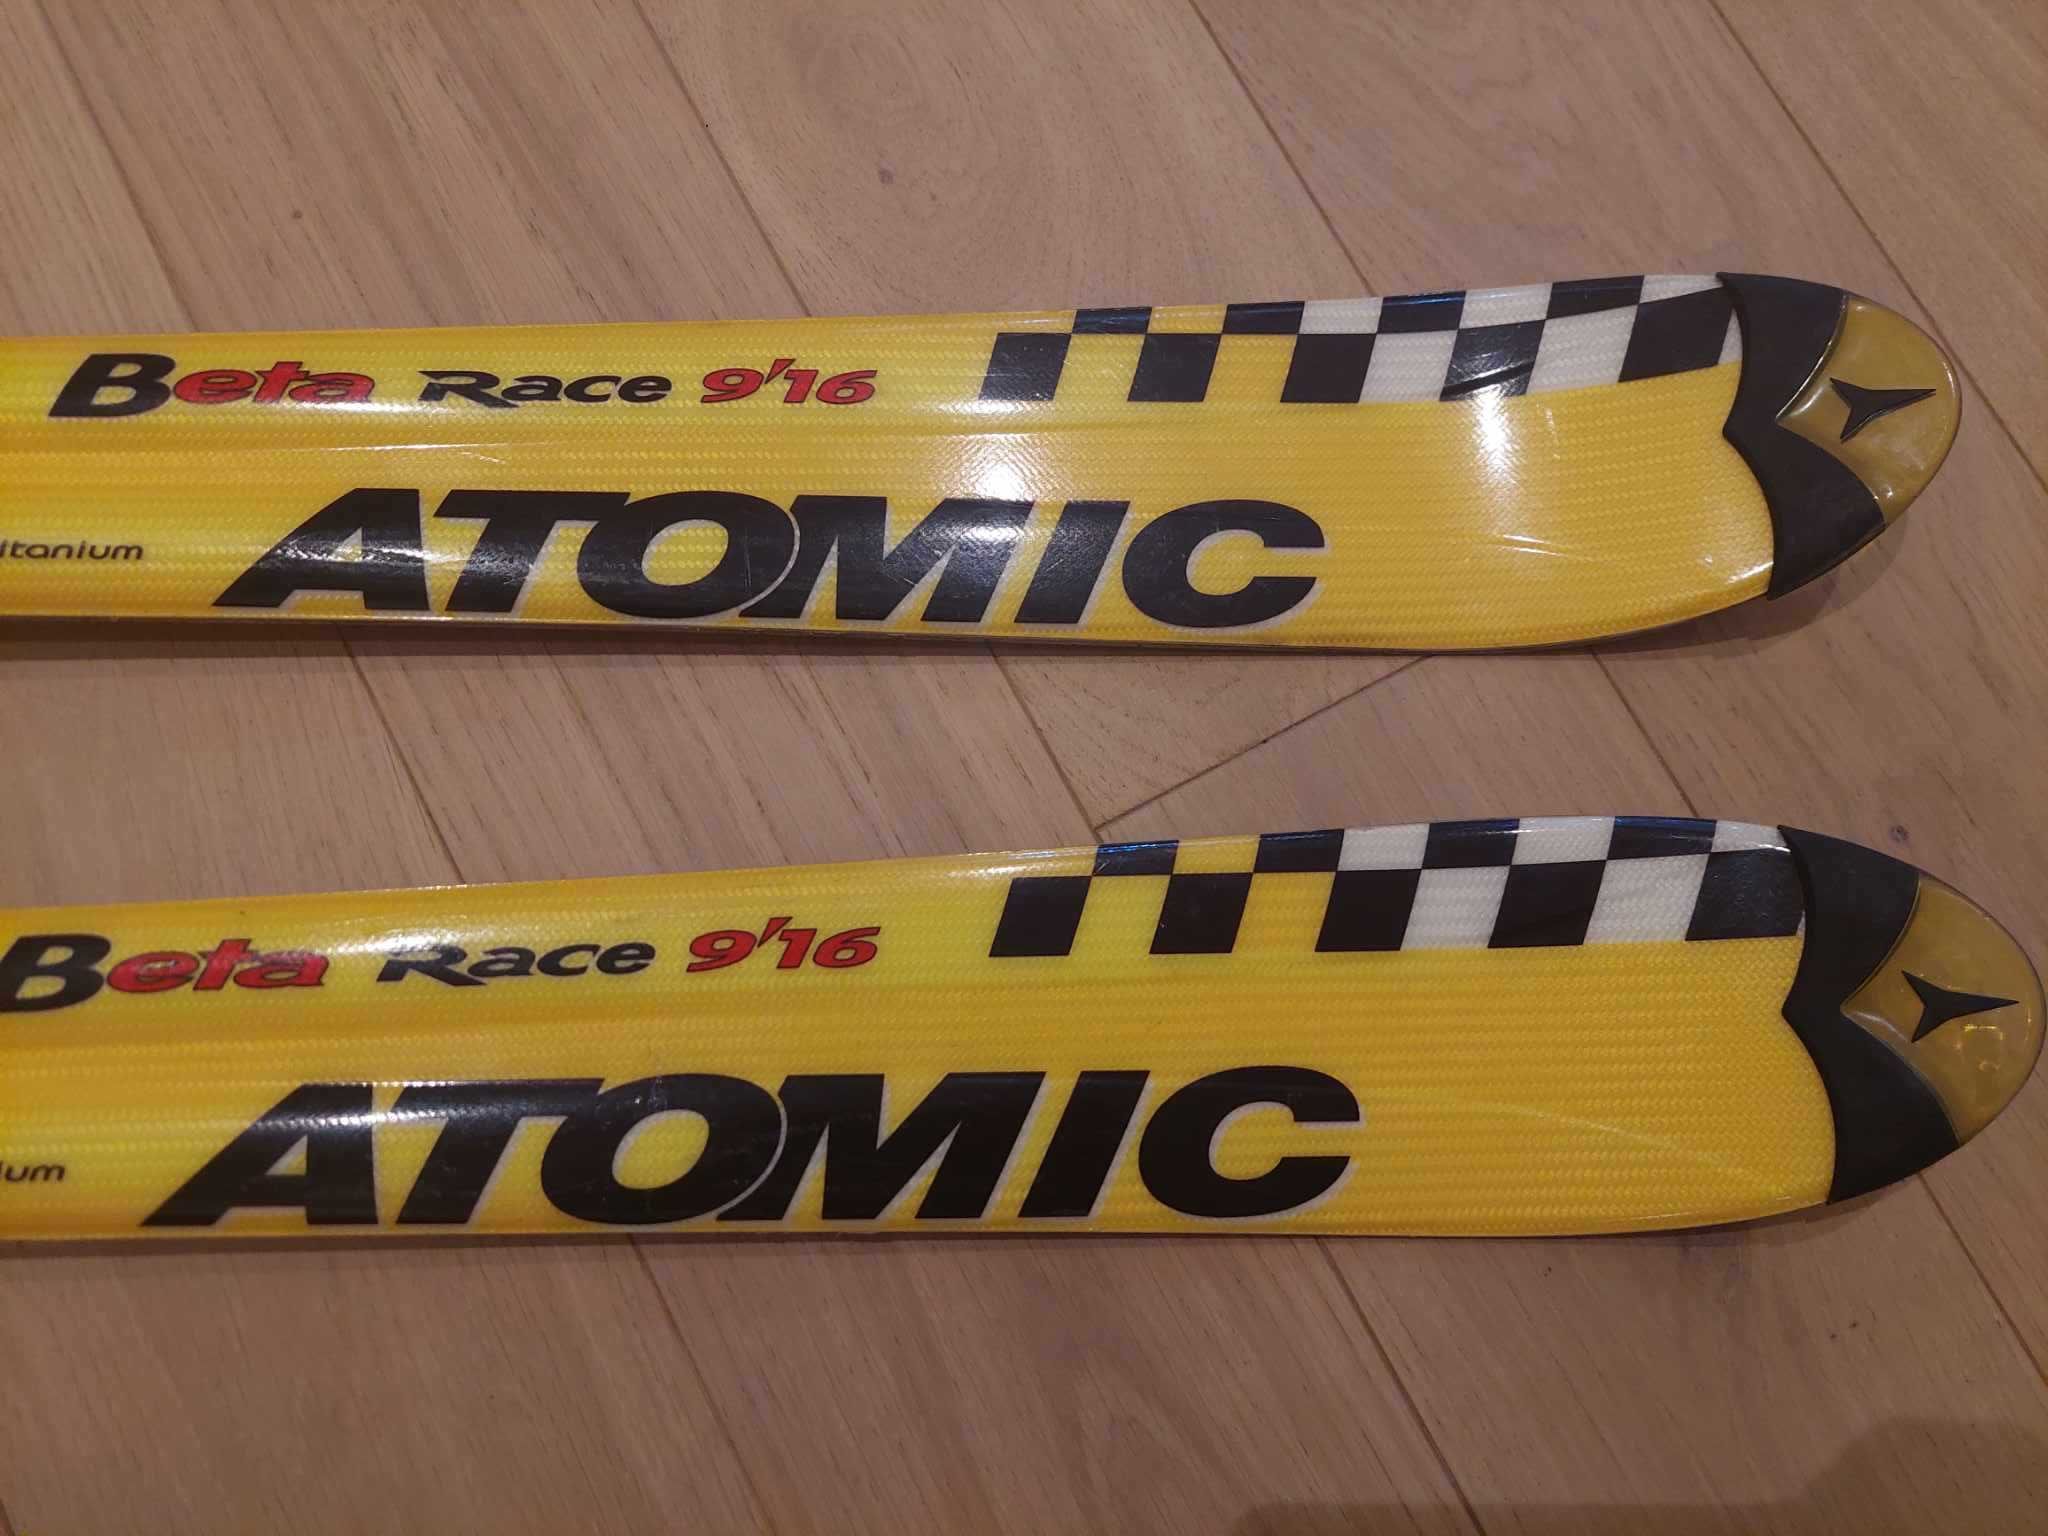 Narty Atomic Beta Race 9'16 150cm